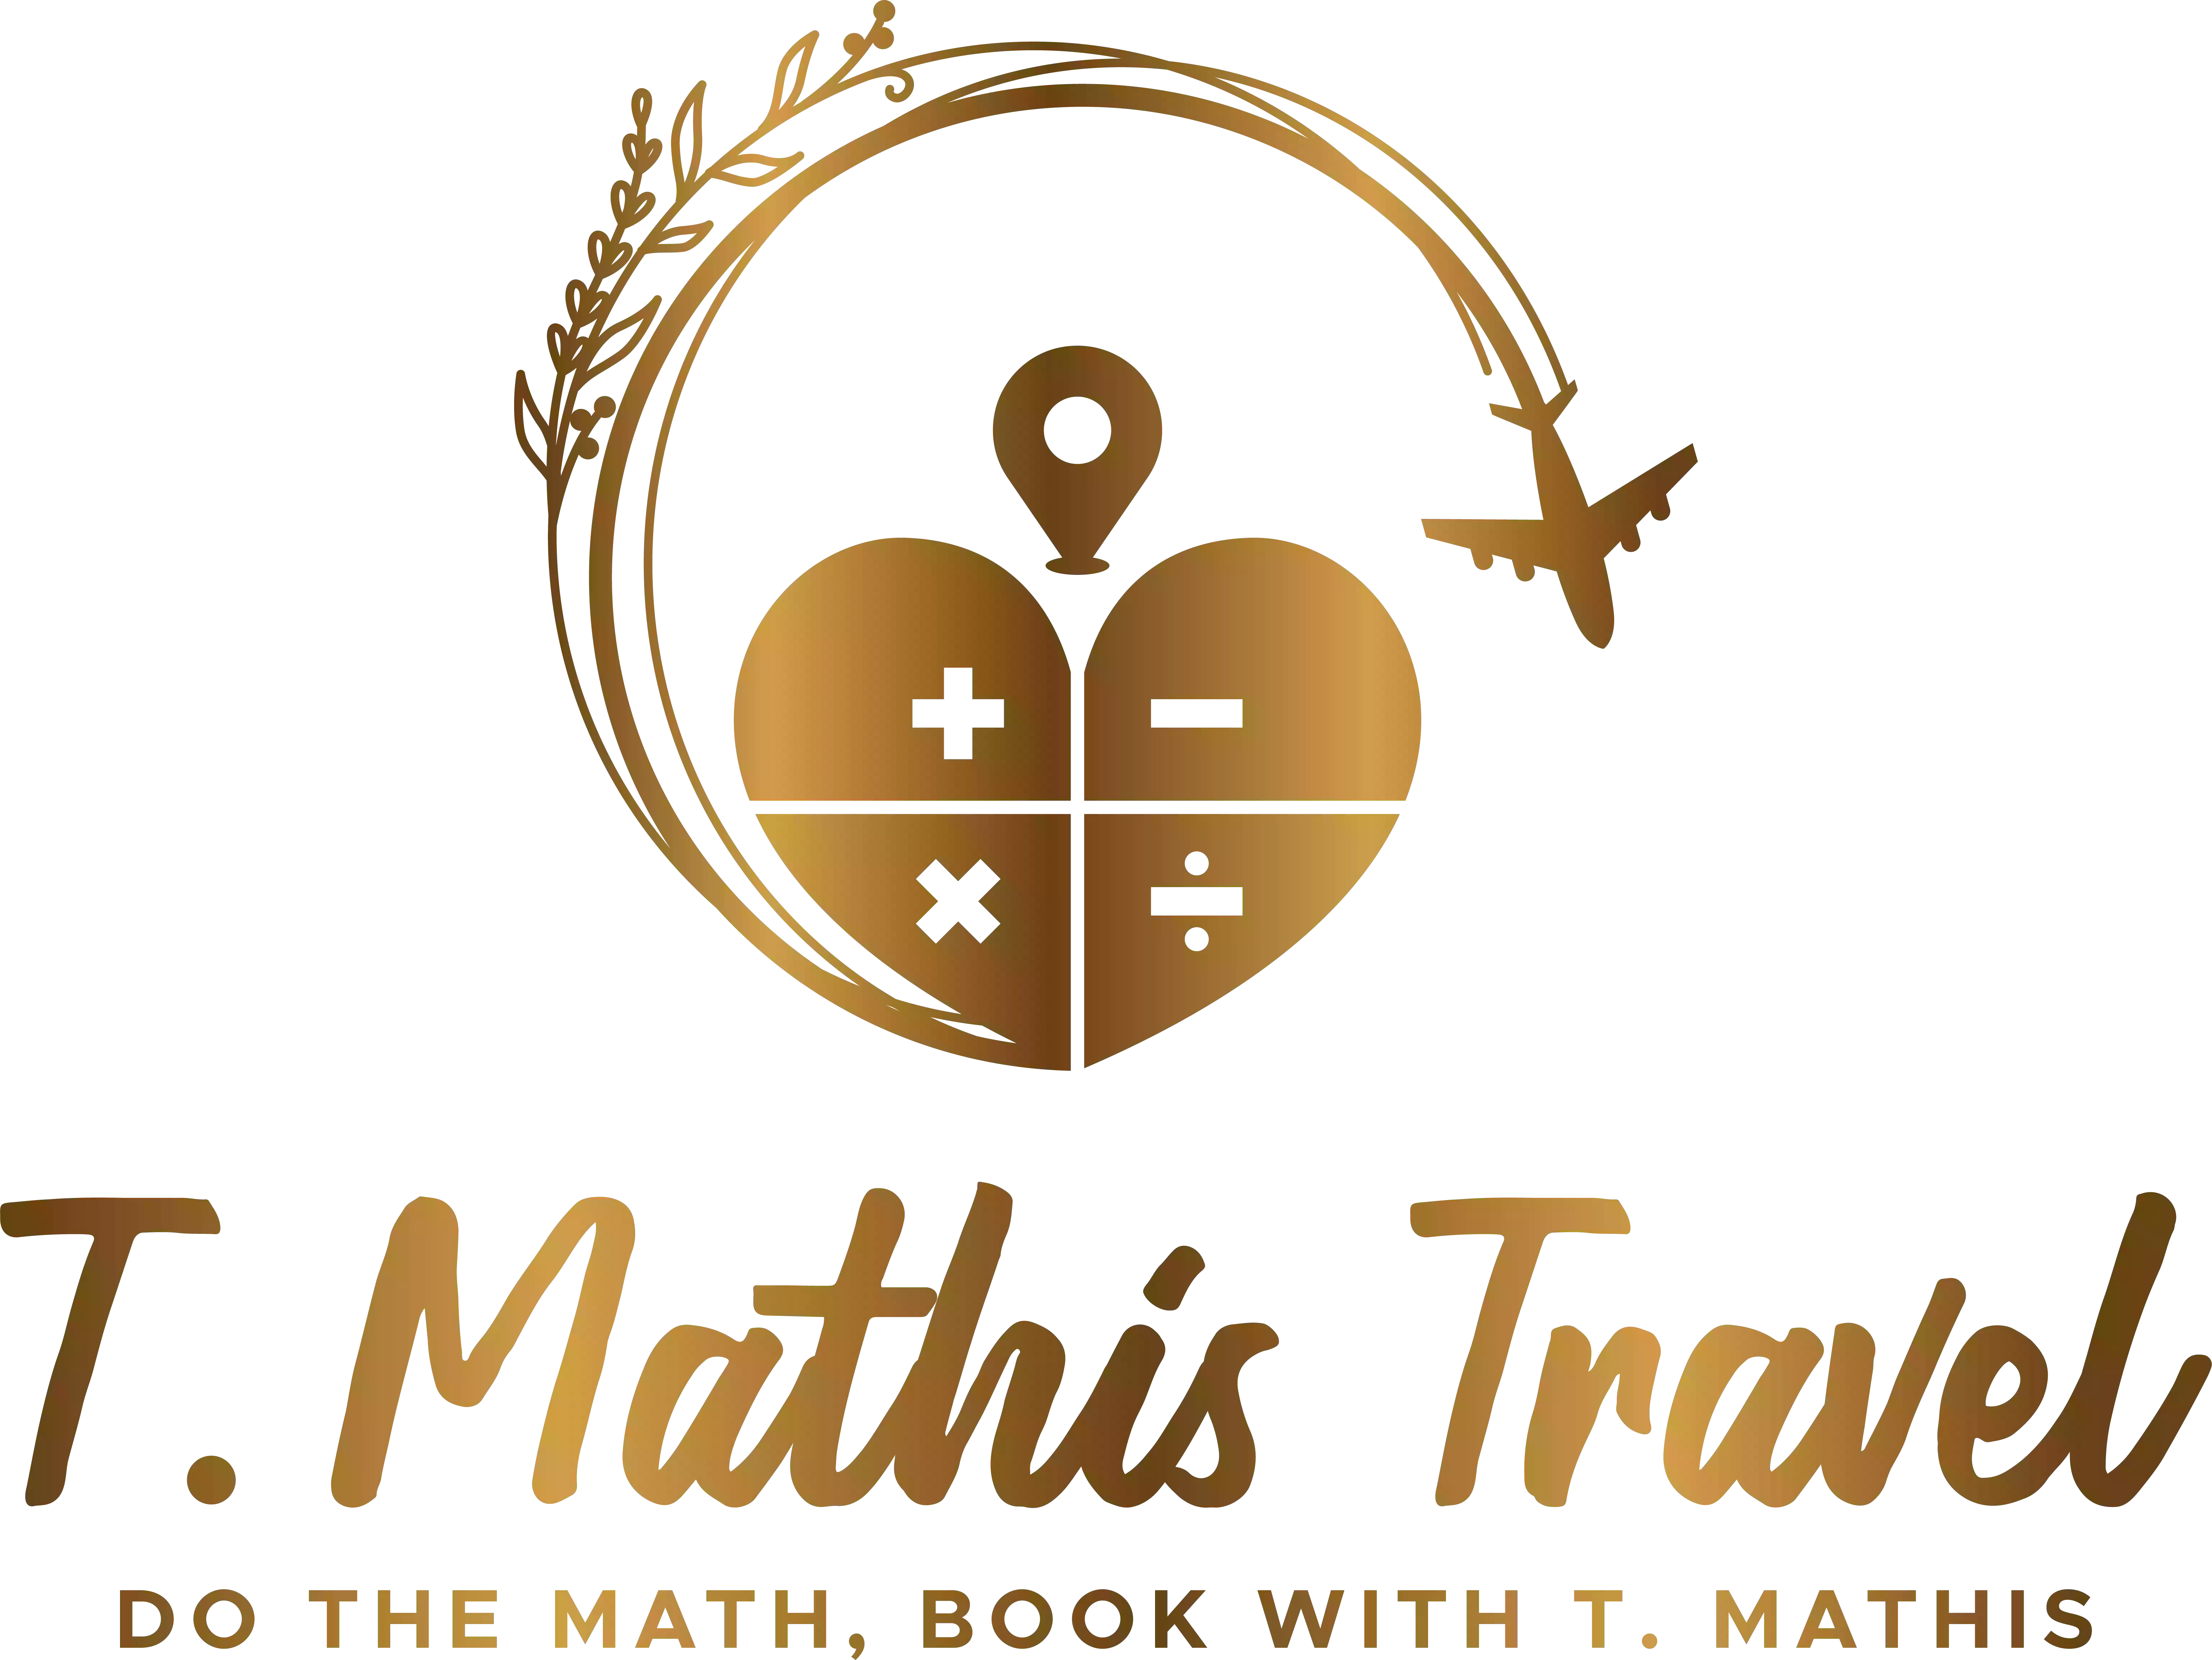 T. Mathis Travel